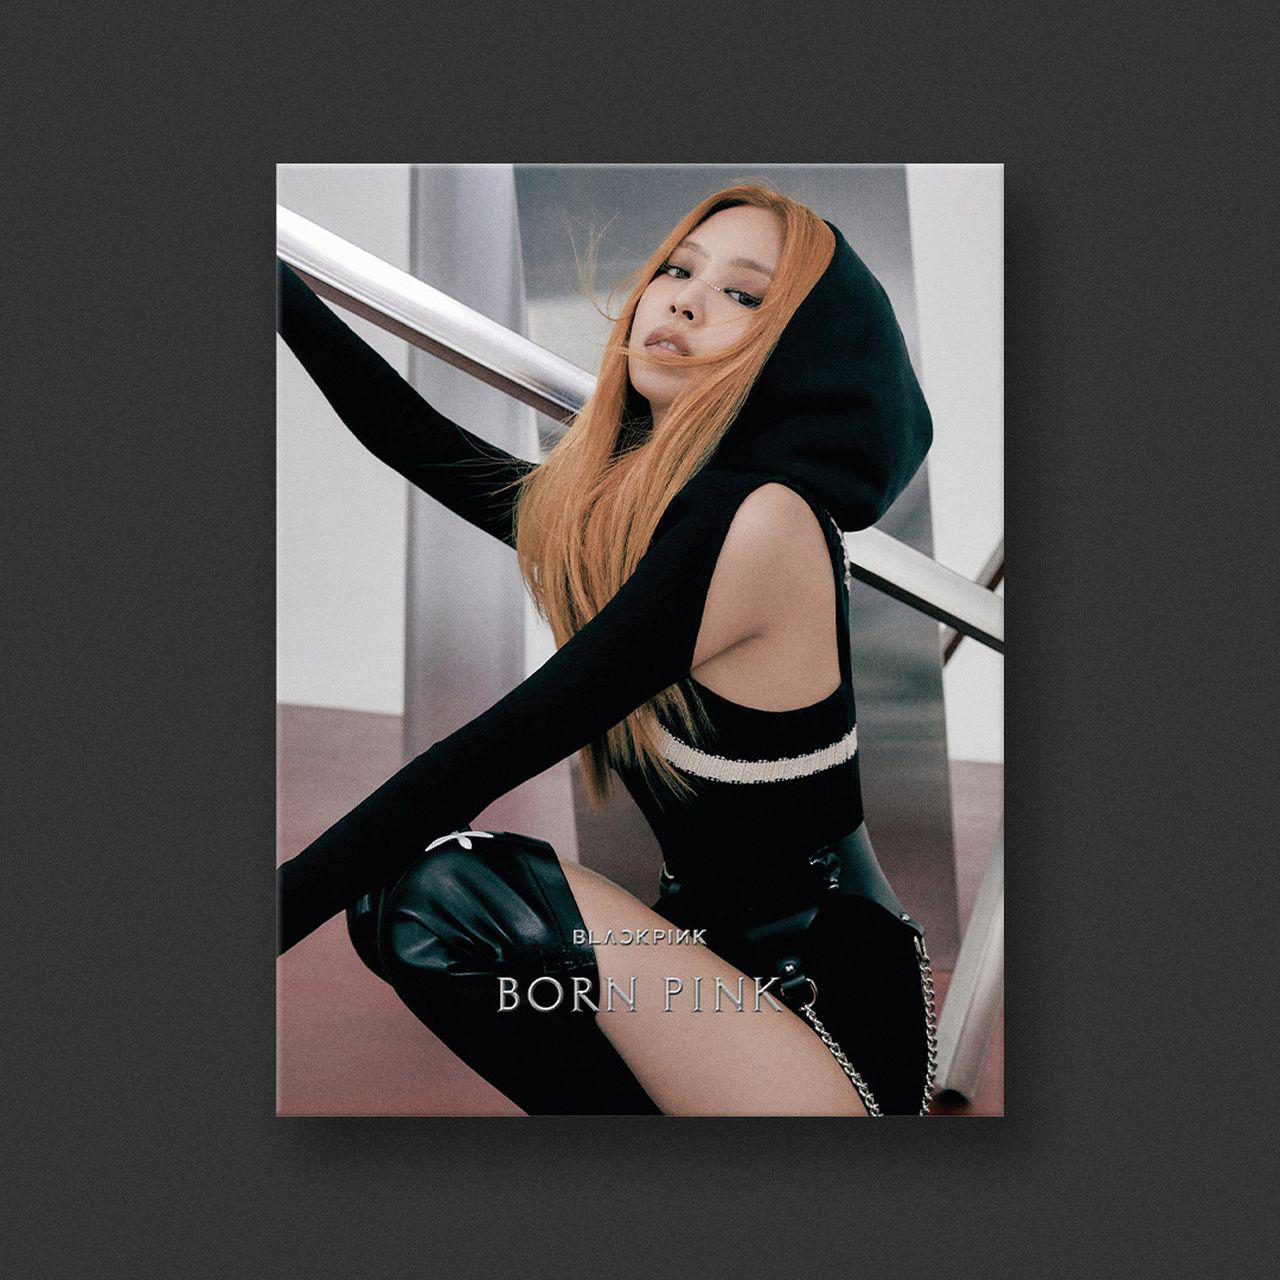 Blackpink - Born Pink (International Digipack Jennie - (CD) Version)